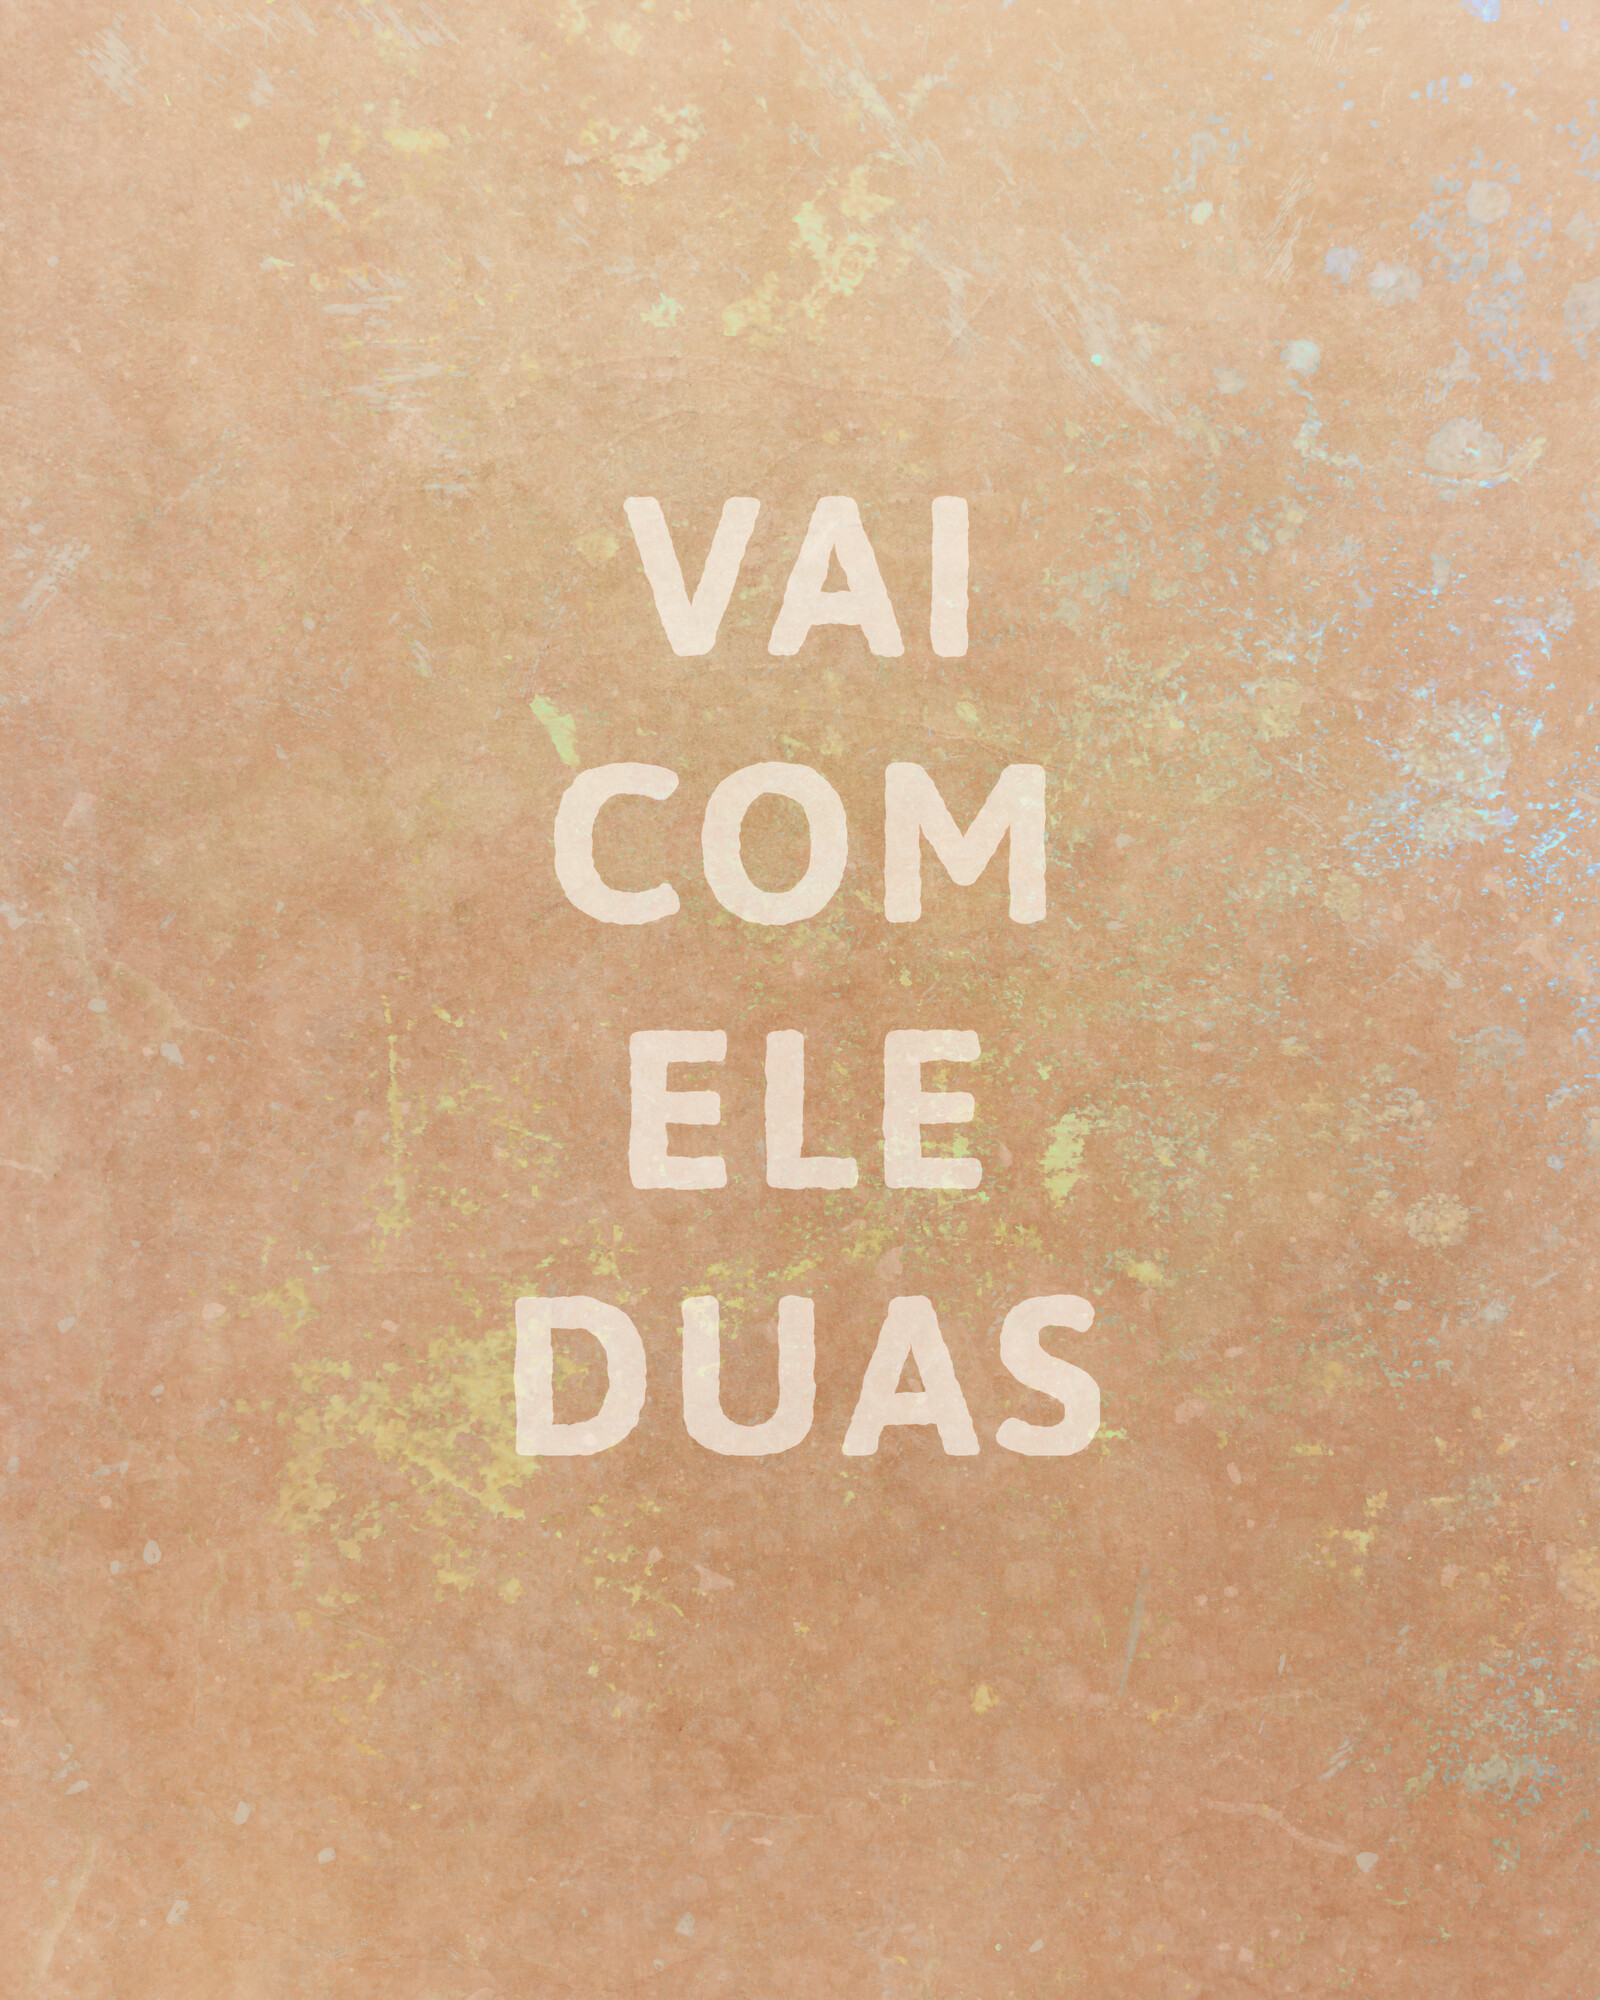 Art with the words "Vai com ele duas" laid out vertically